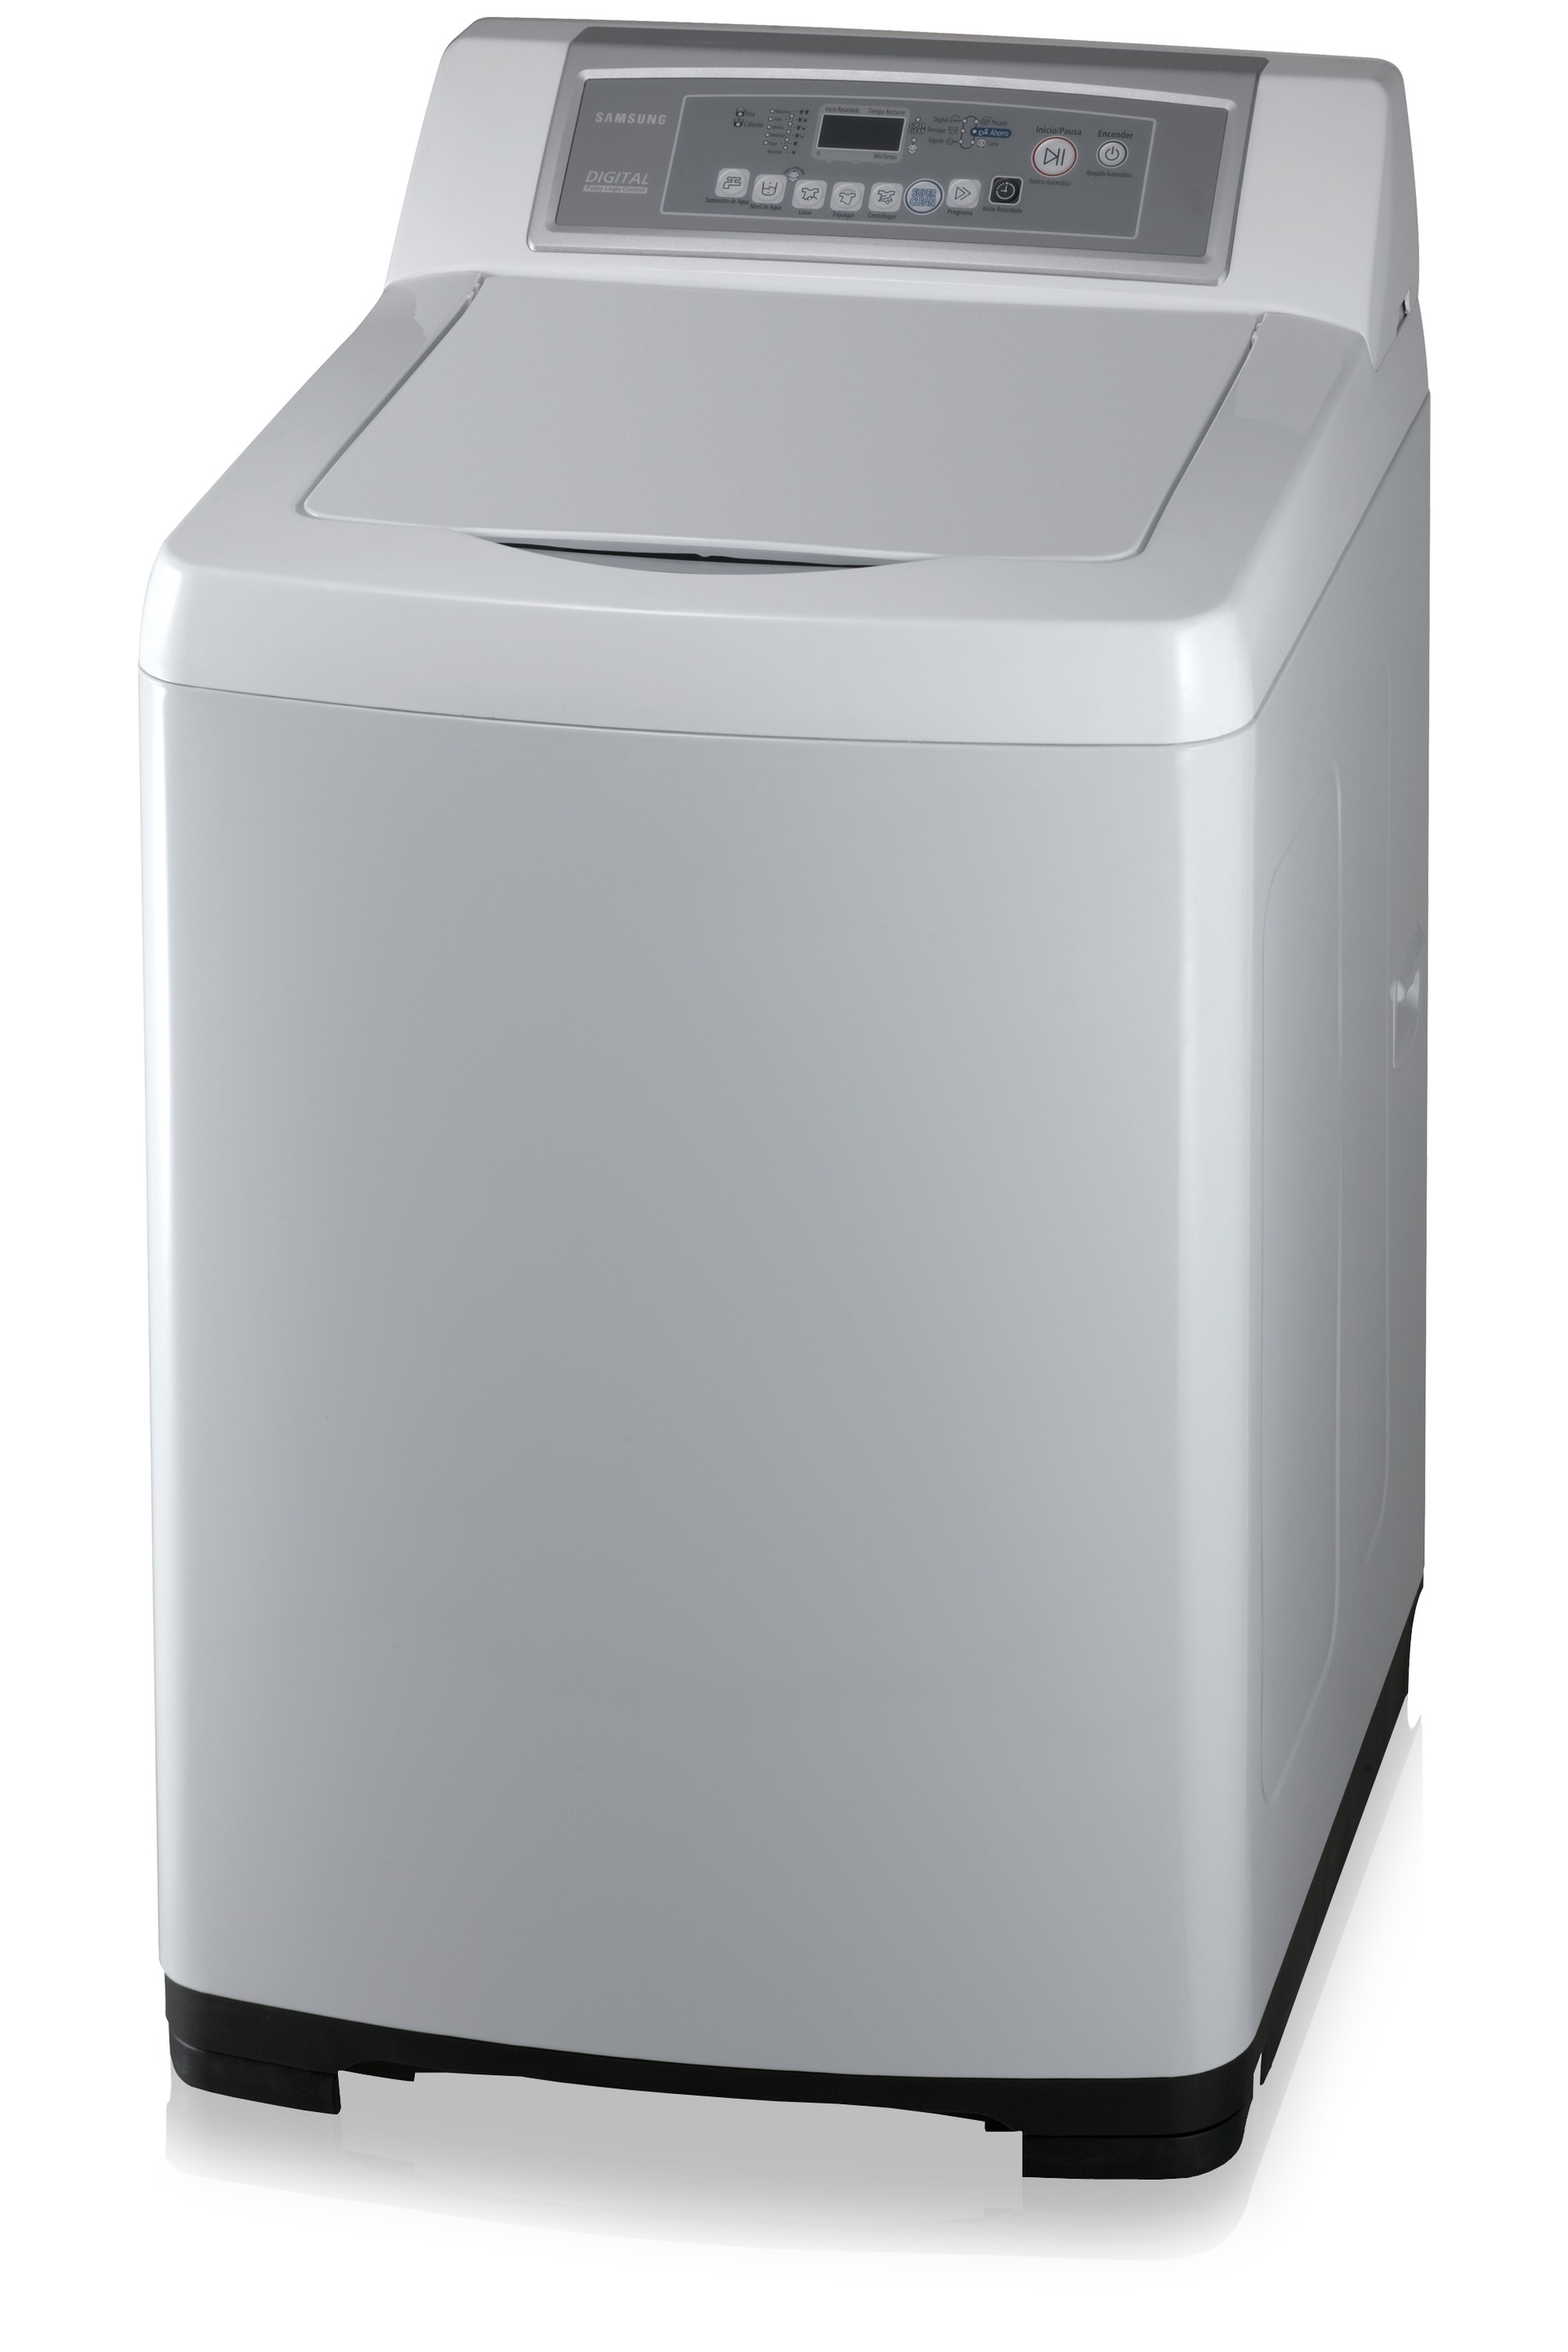 23+ Surface Mount Washing Machine Box